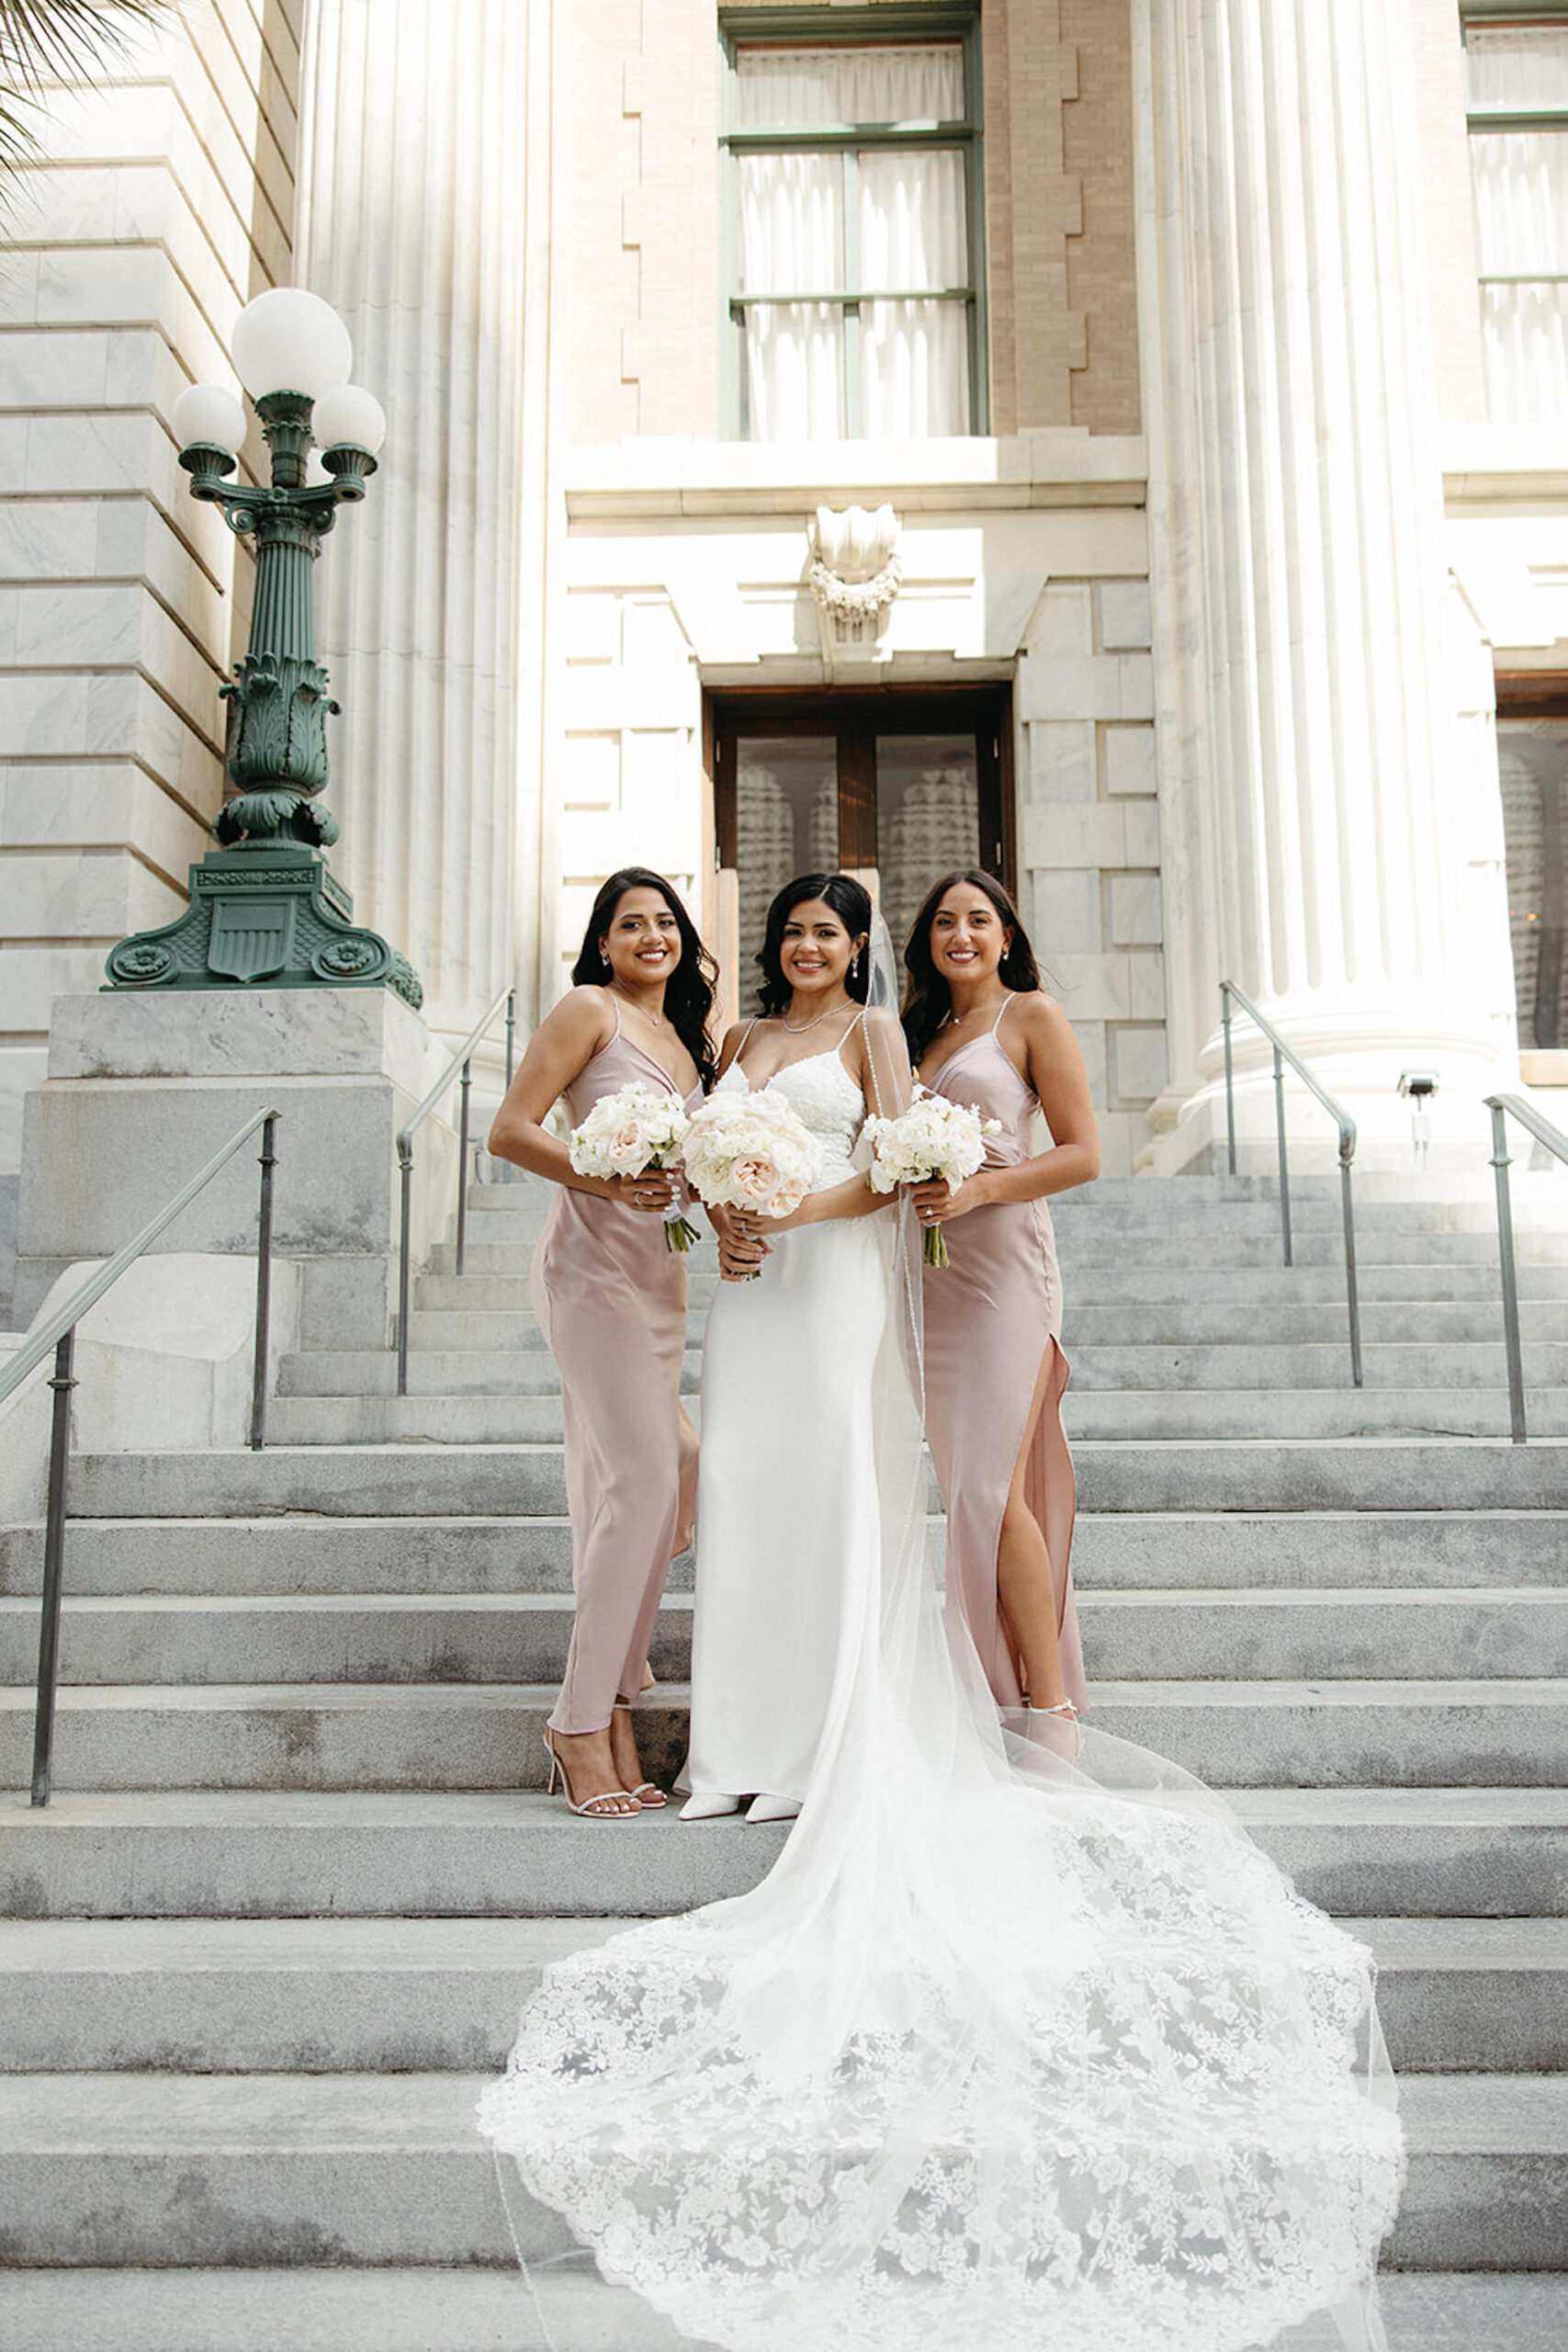 Matching Neutral Champagne Satin Bridesmaids Wedding Dress Inspiration | Tampa Hair and Makeup Artist Femme Akoi Beauty Studio